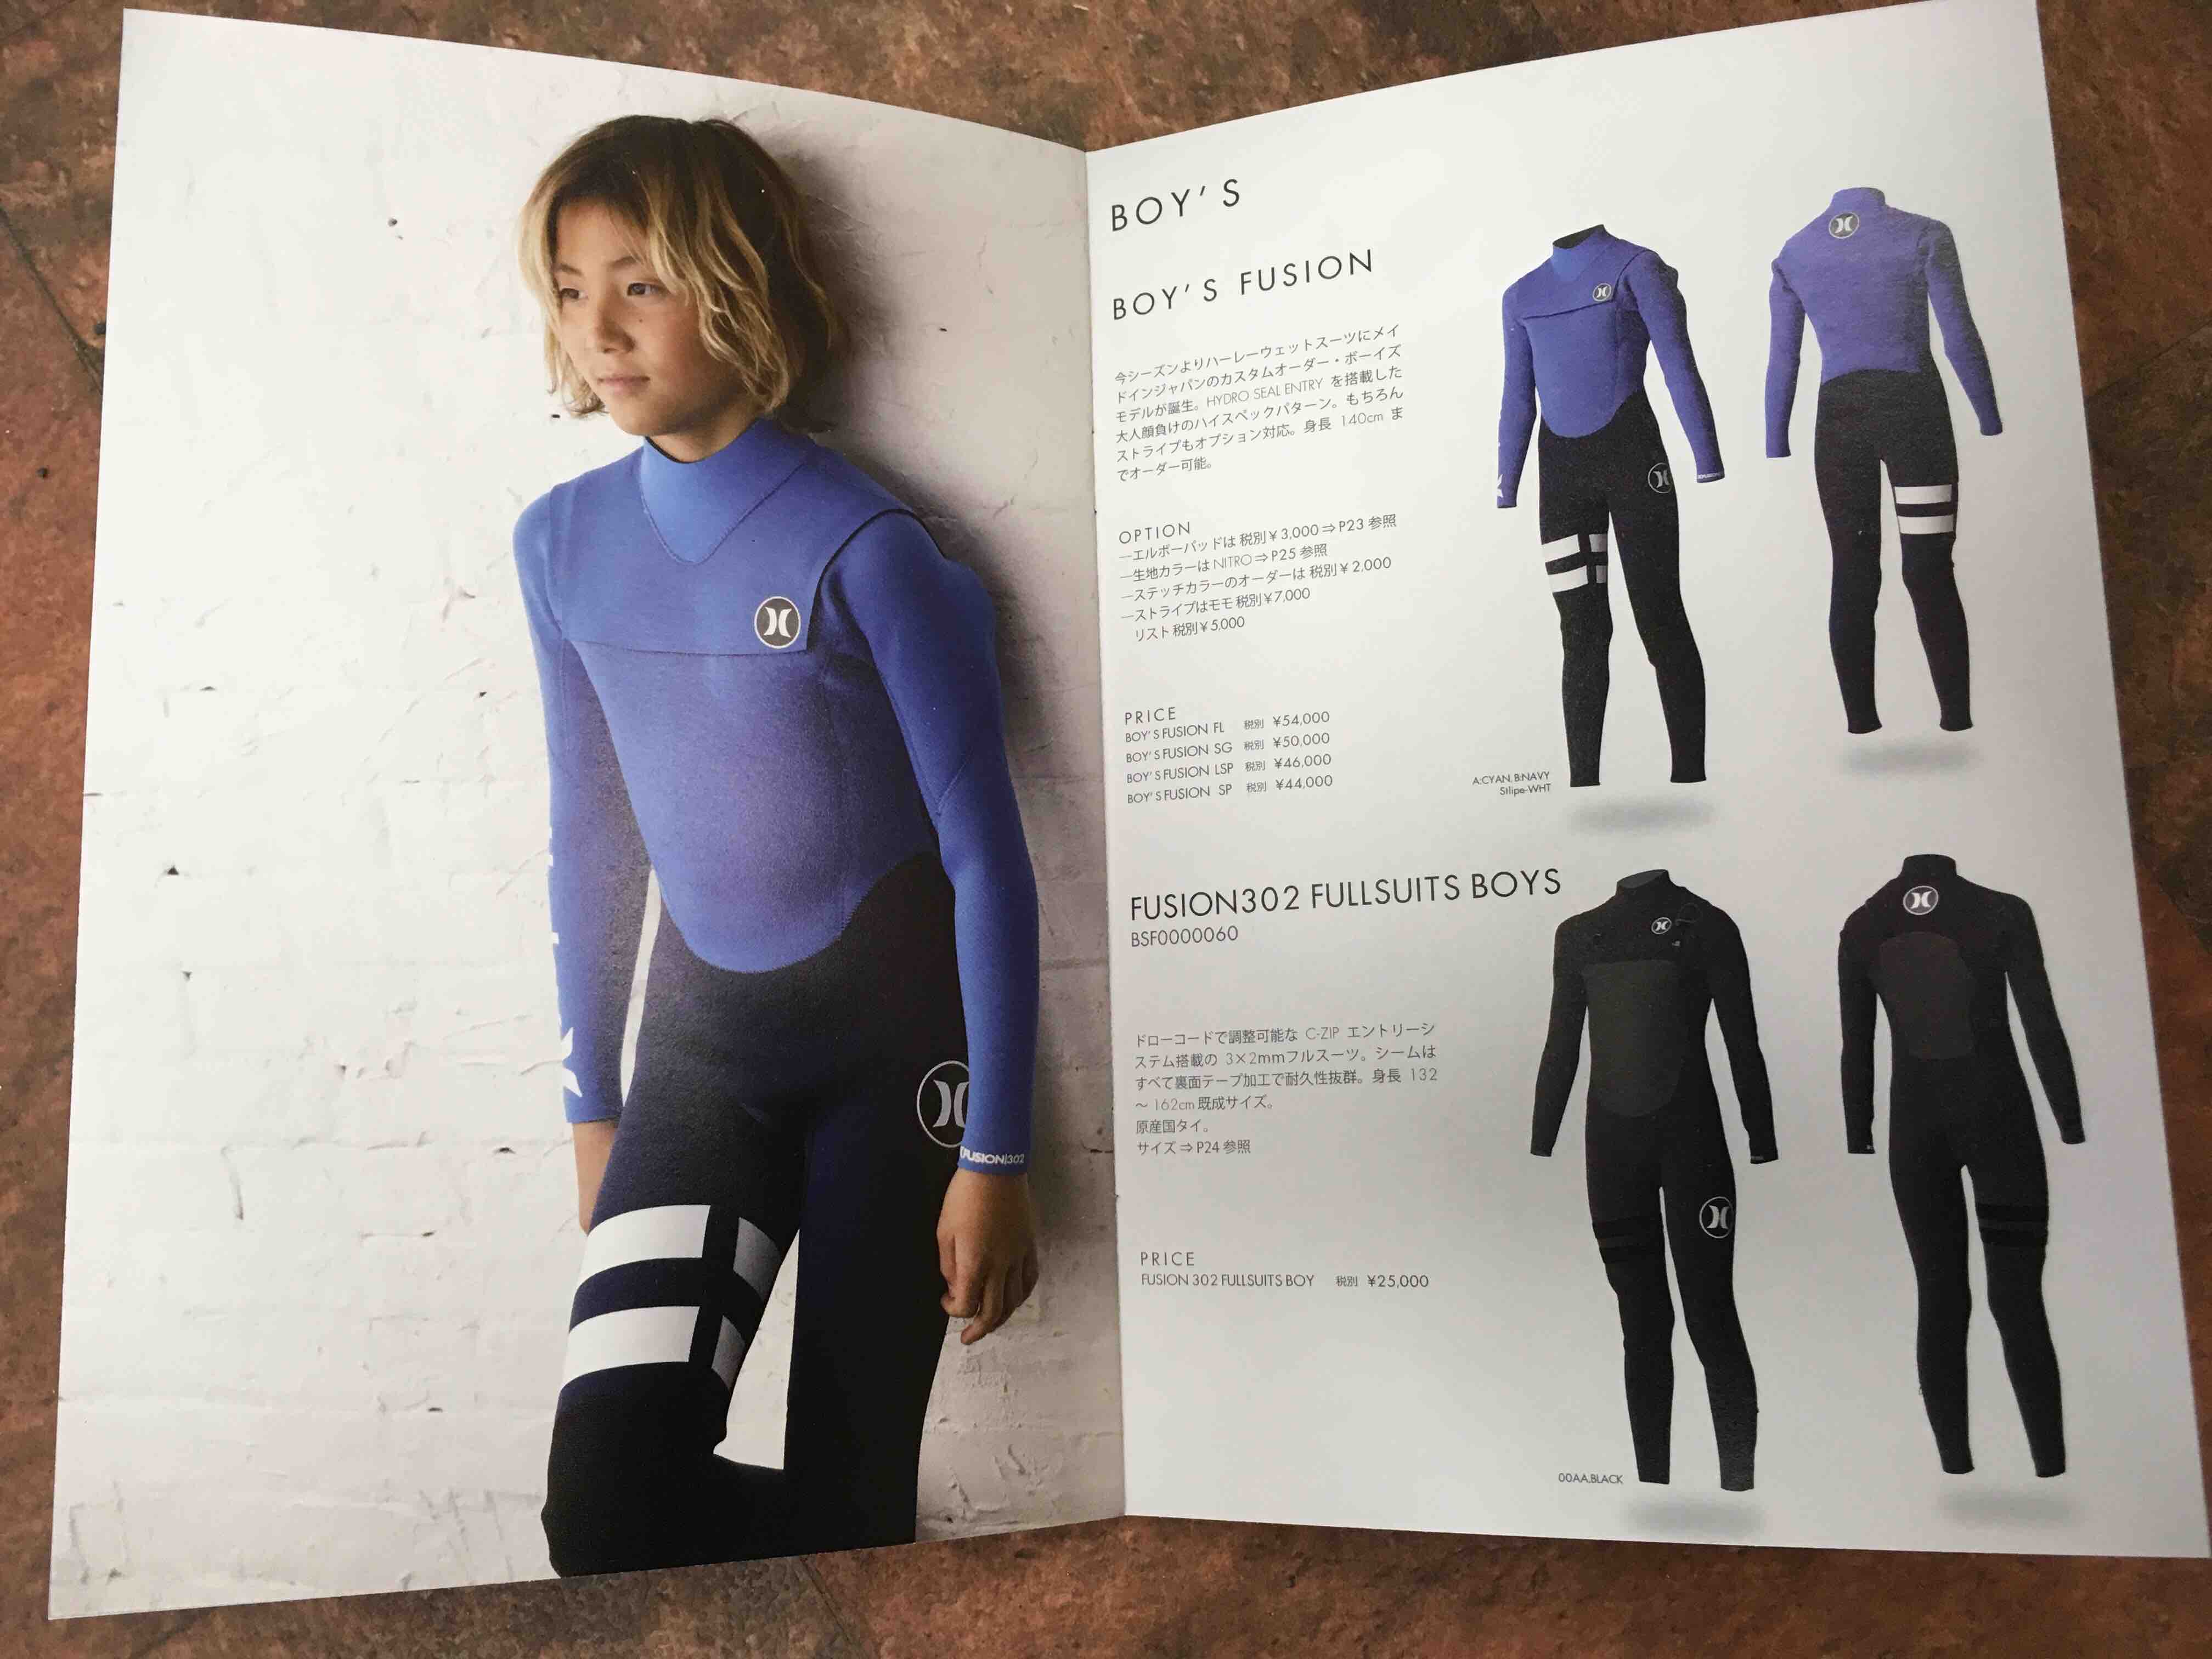 Hurleyウエットスーツカタログ | サーフィンスクール千葉 KI-SURF